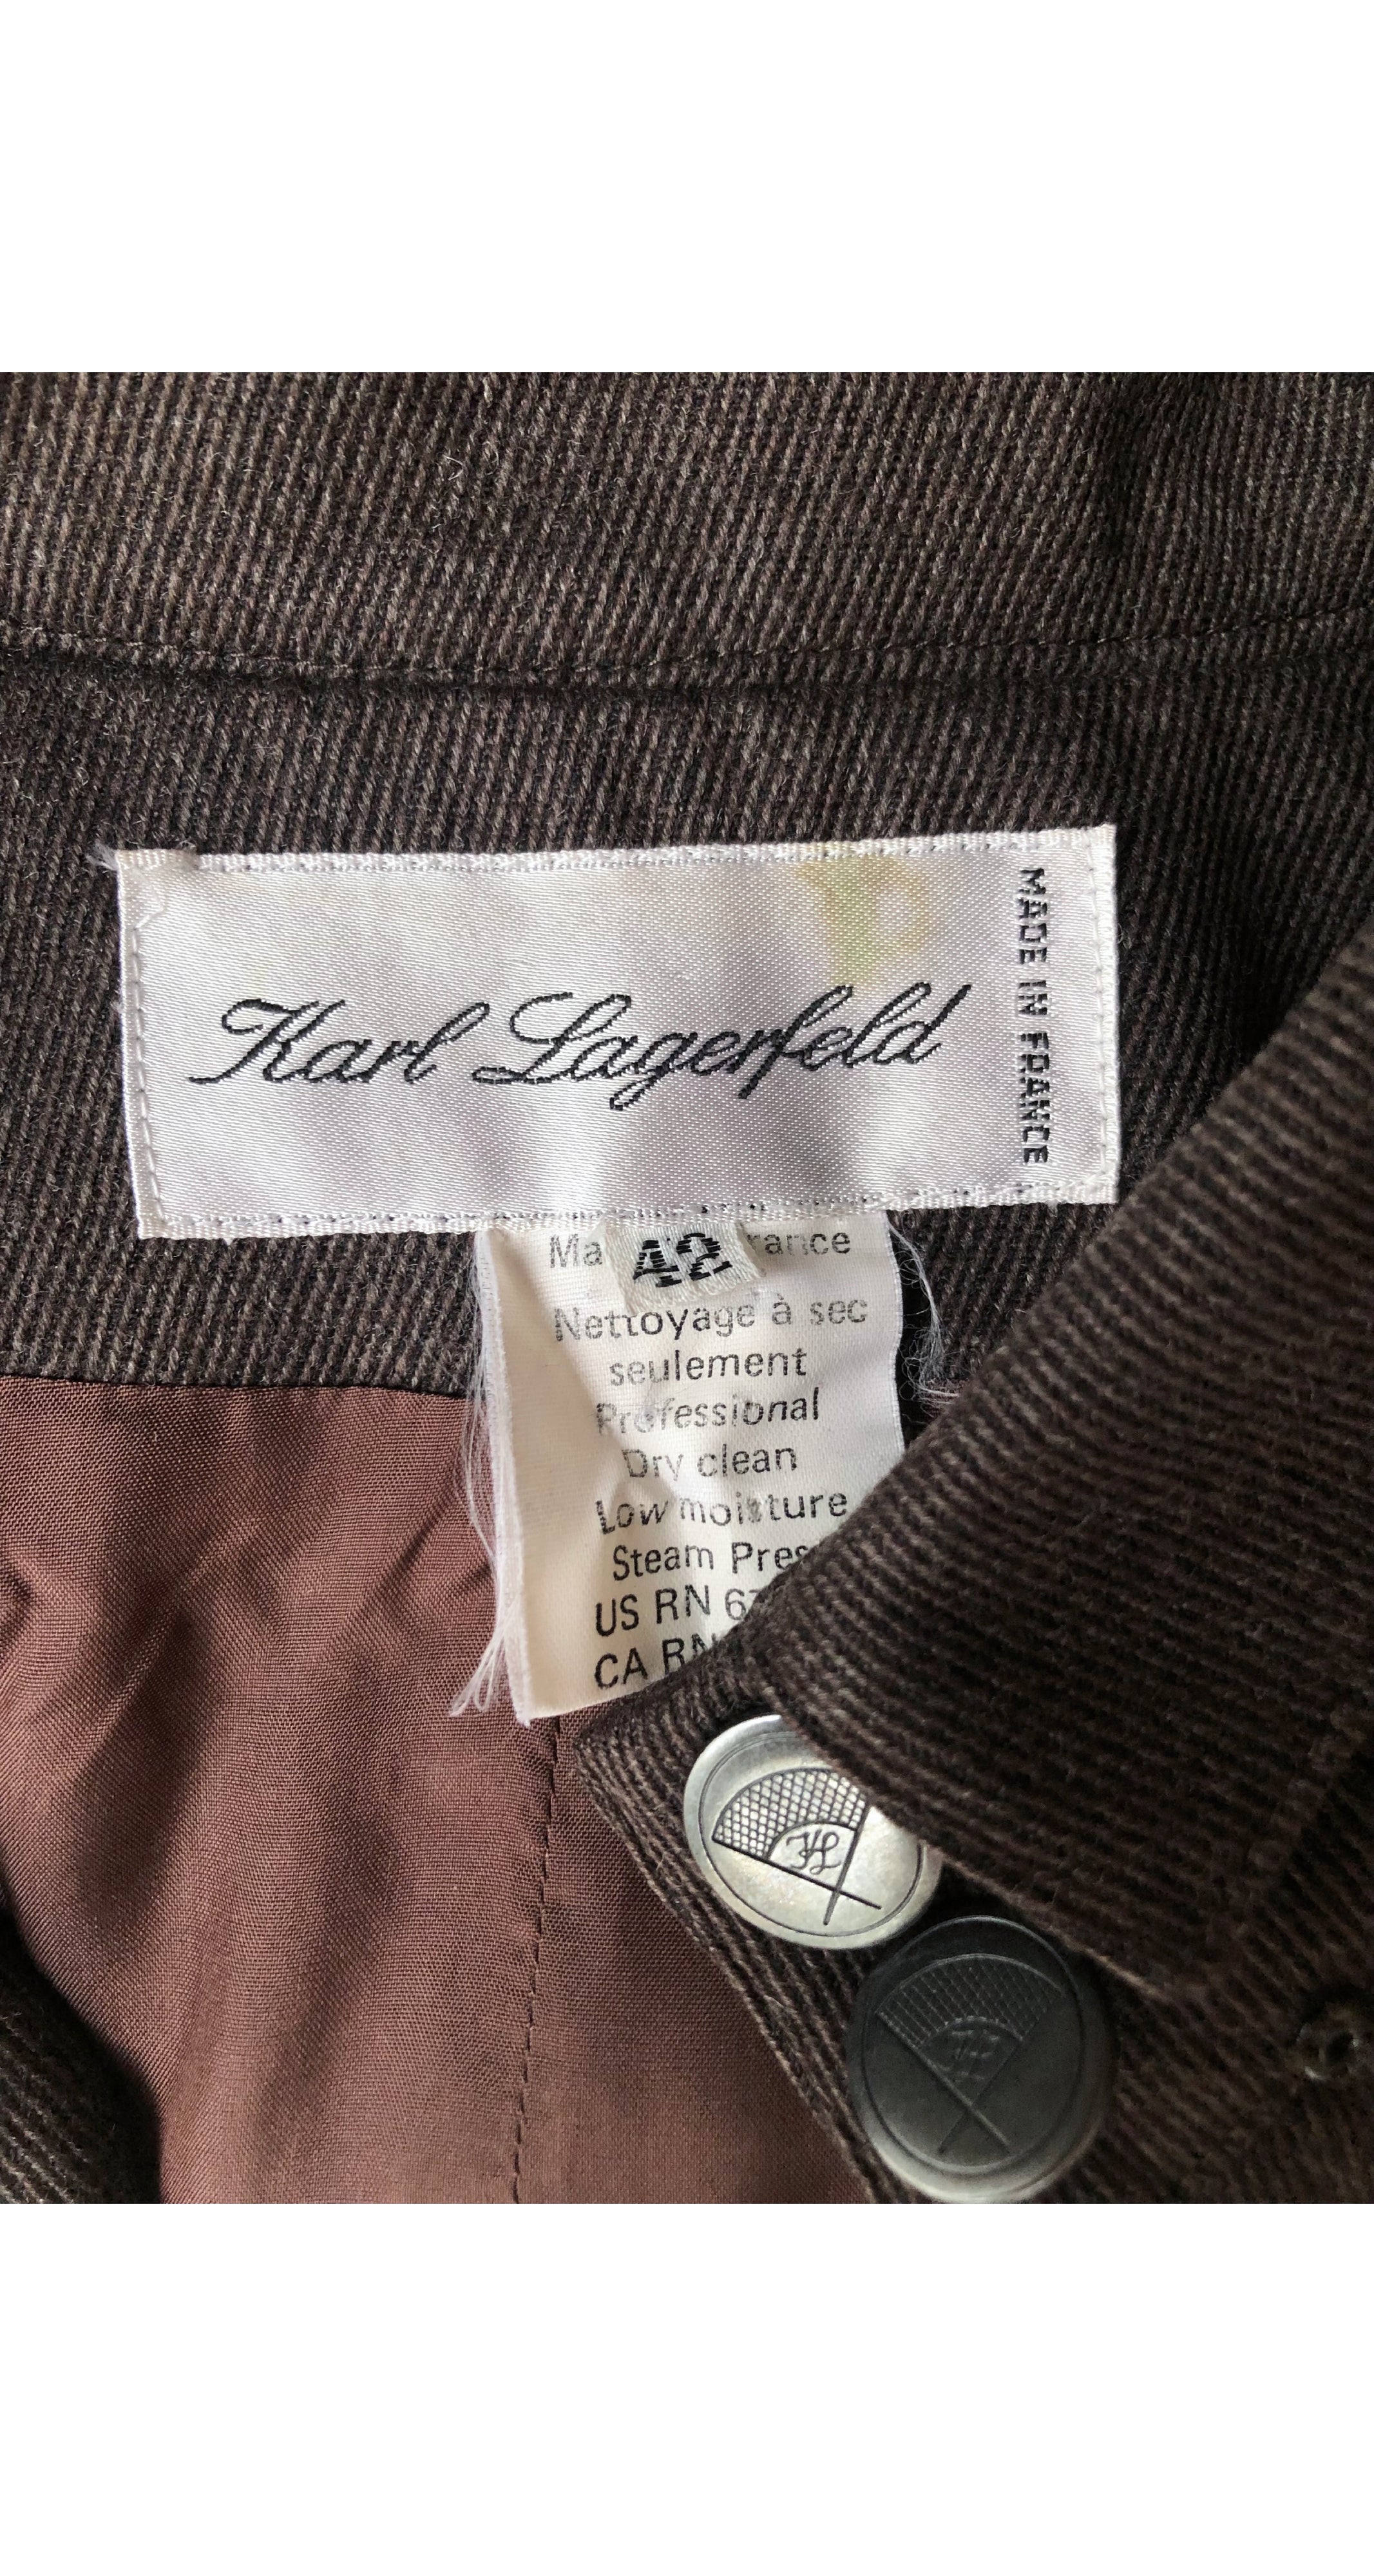 1980s Brown Wool Box-Cut Cropped Jacket